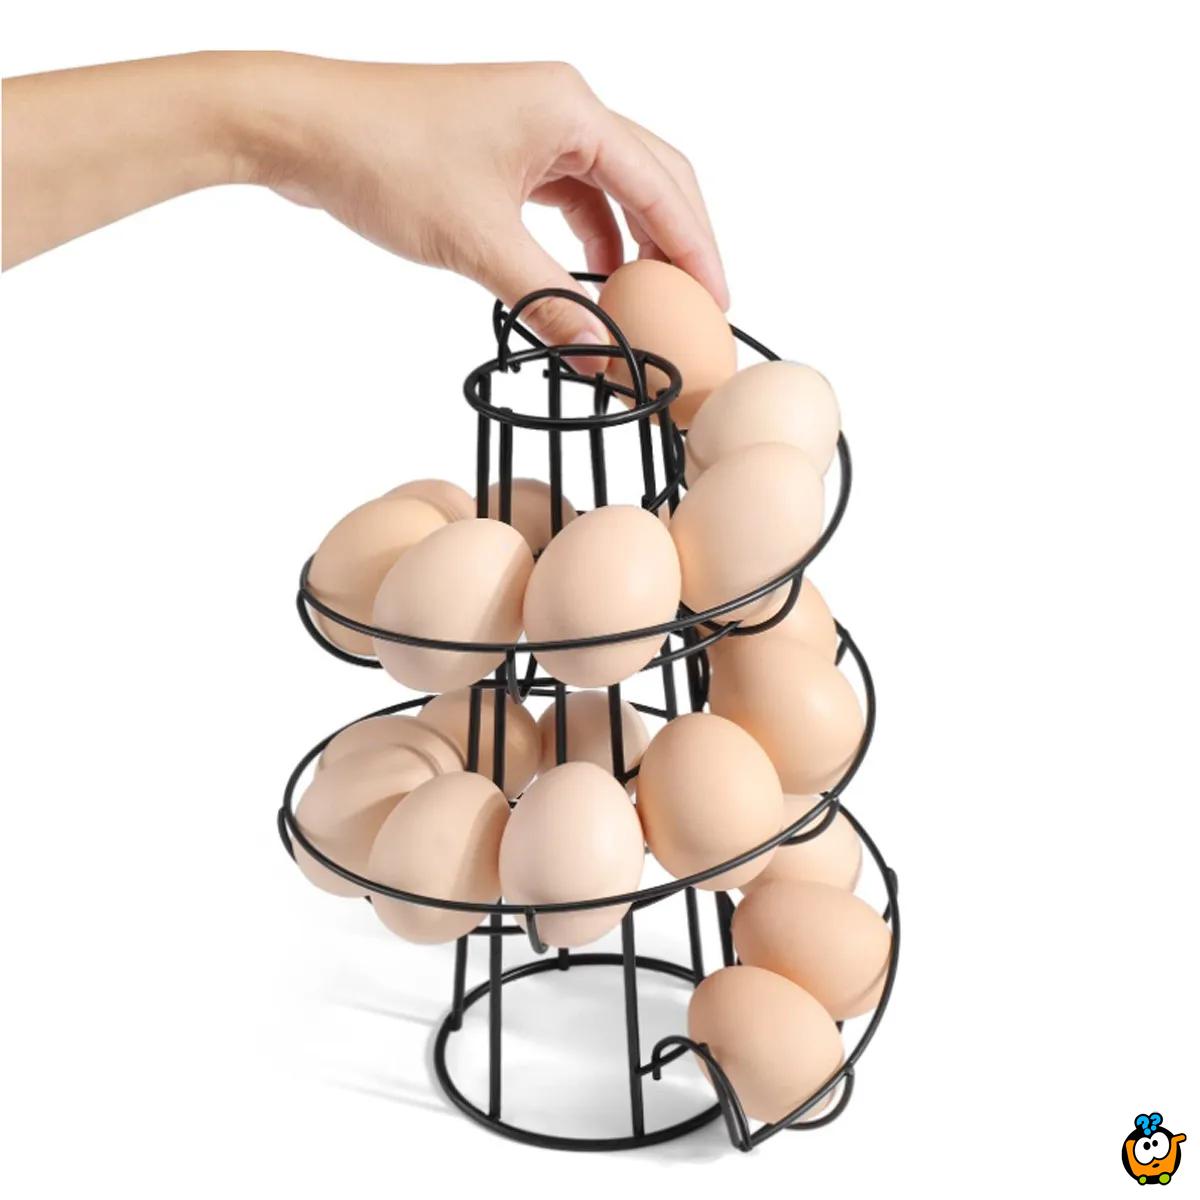 Spiralni metalni stalak - organizer za jaja